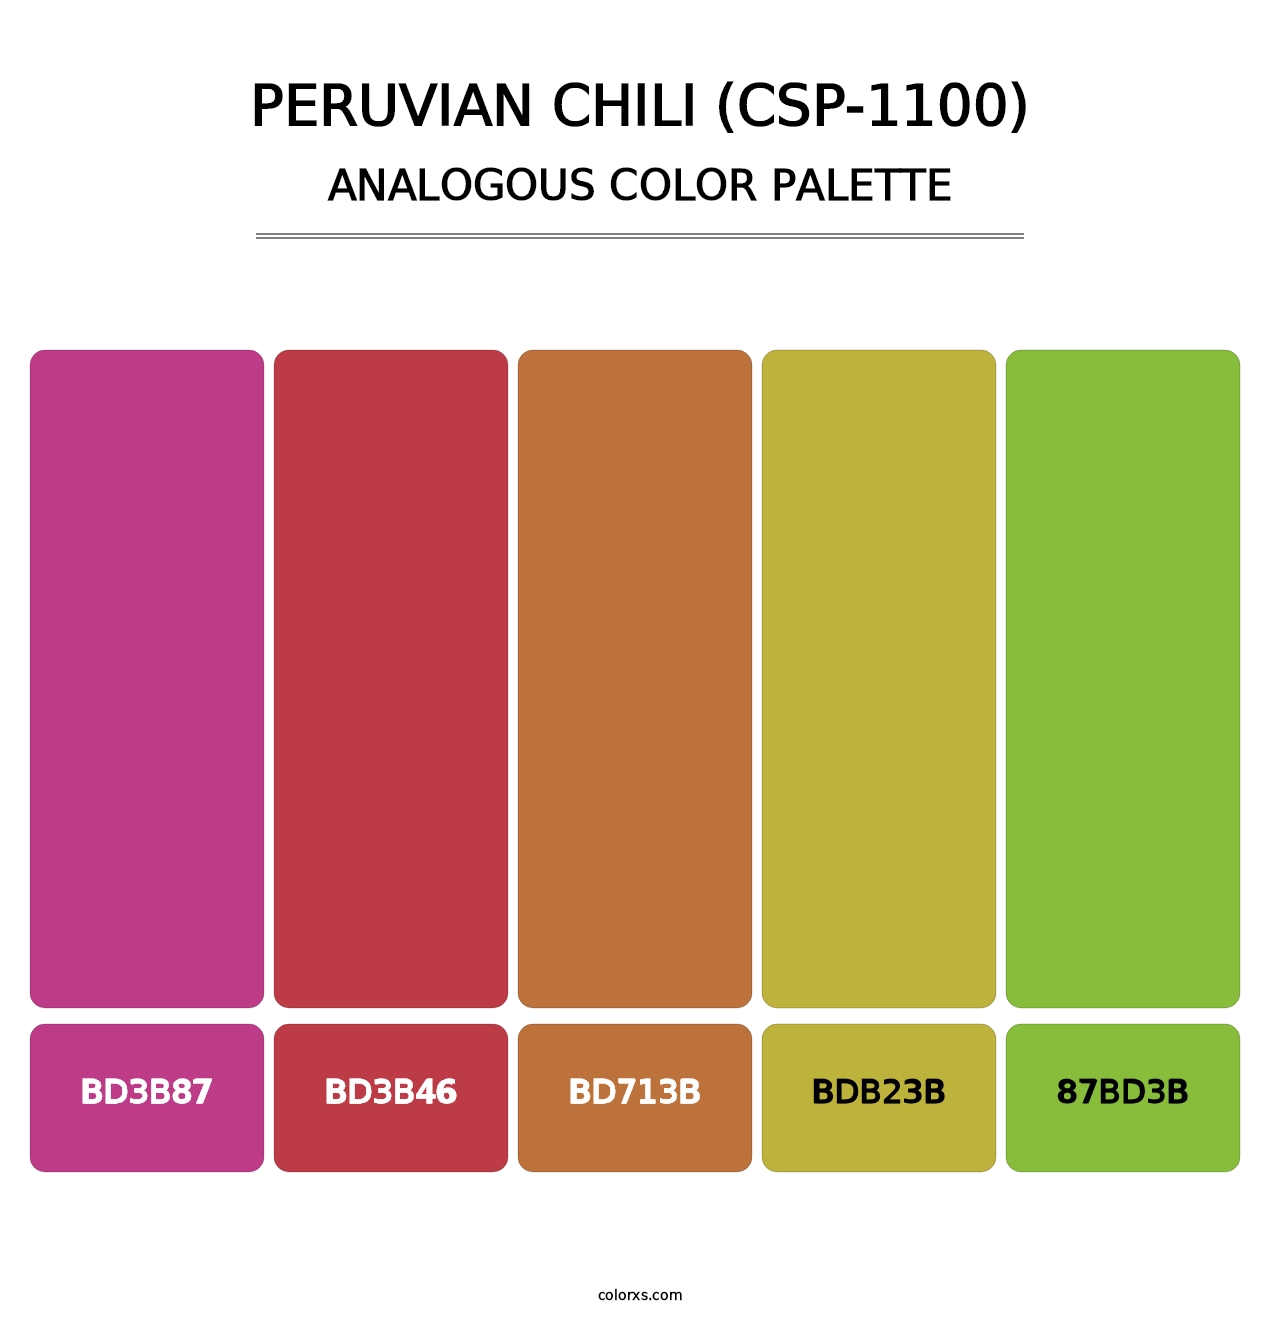 Peruvian Chili (CSP-1100) - Analogous Color Palette